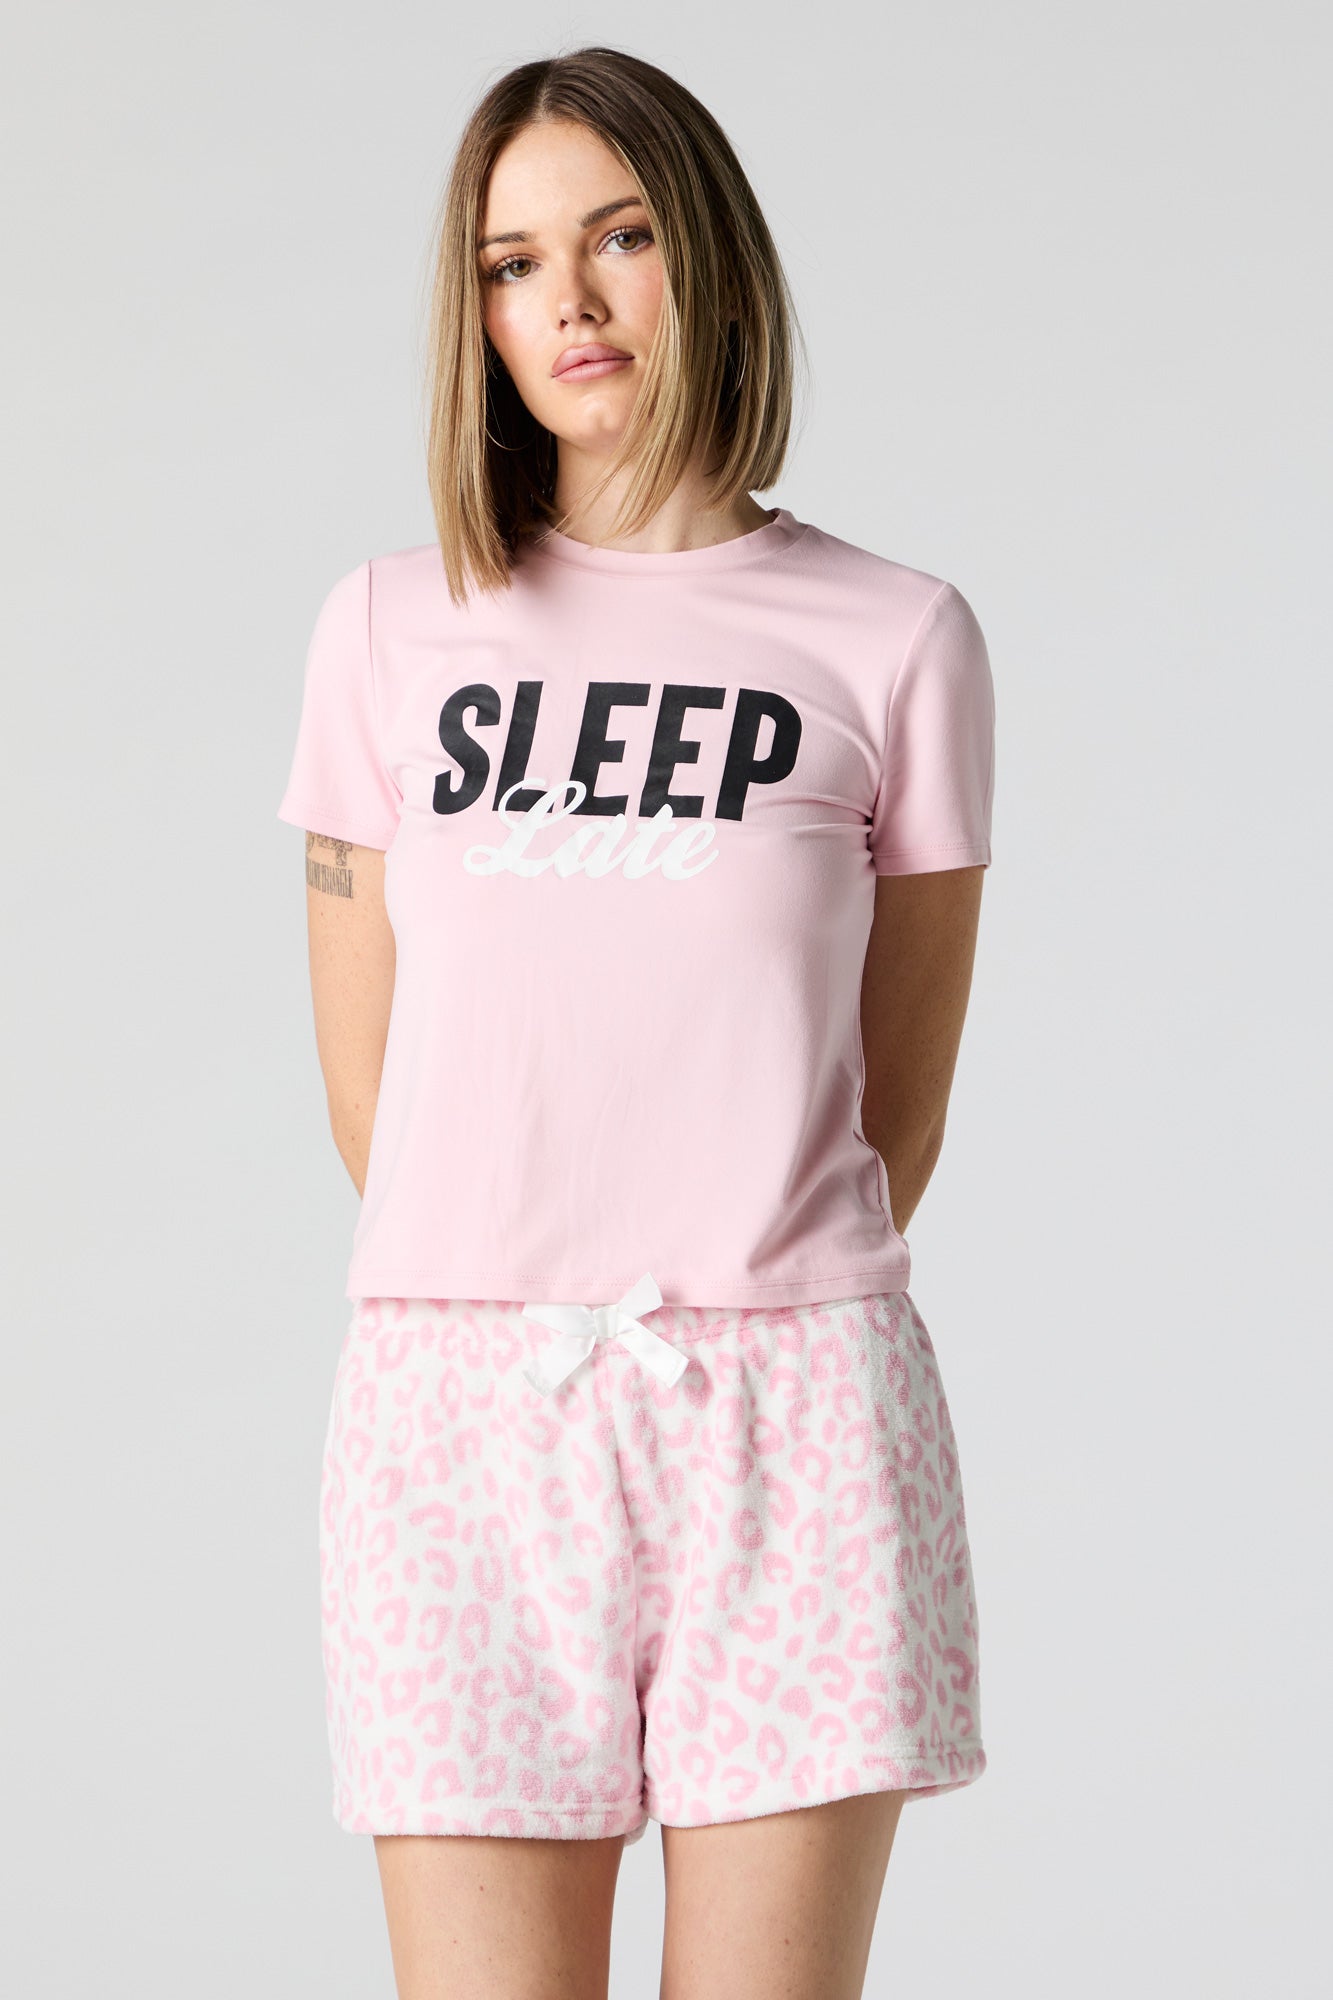 Sleep Late Graphic T-Shirt and Plush Short 2 Piece Pajama Set